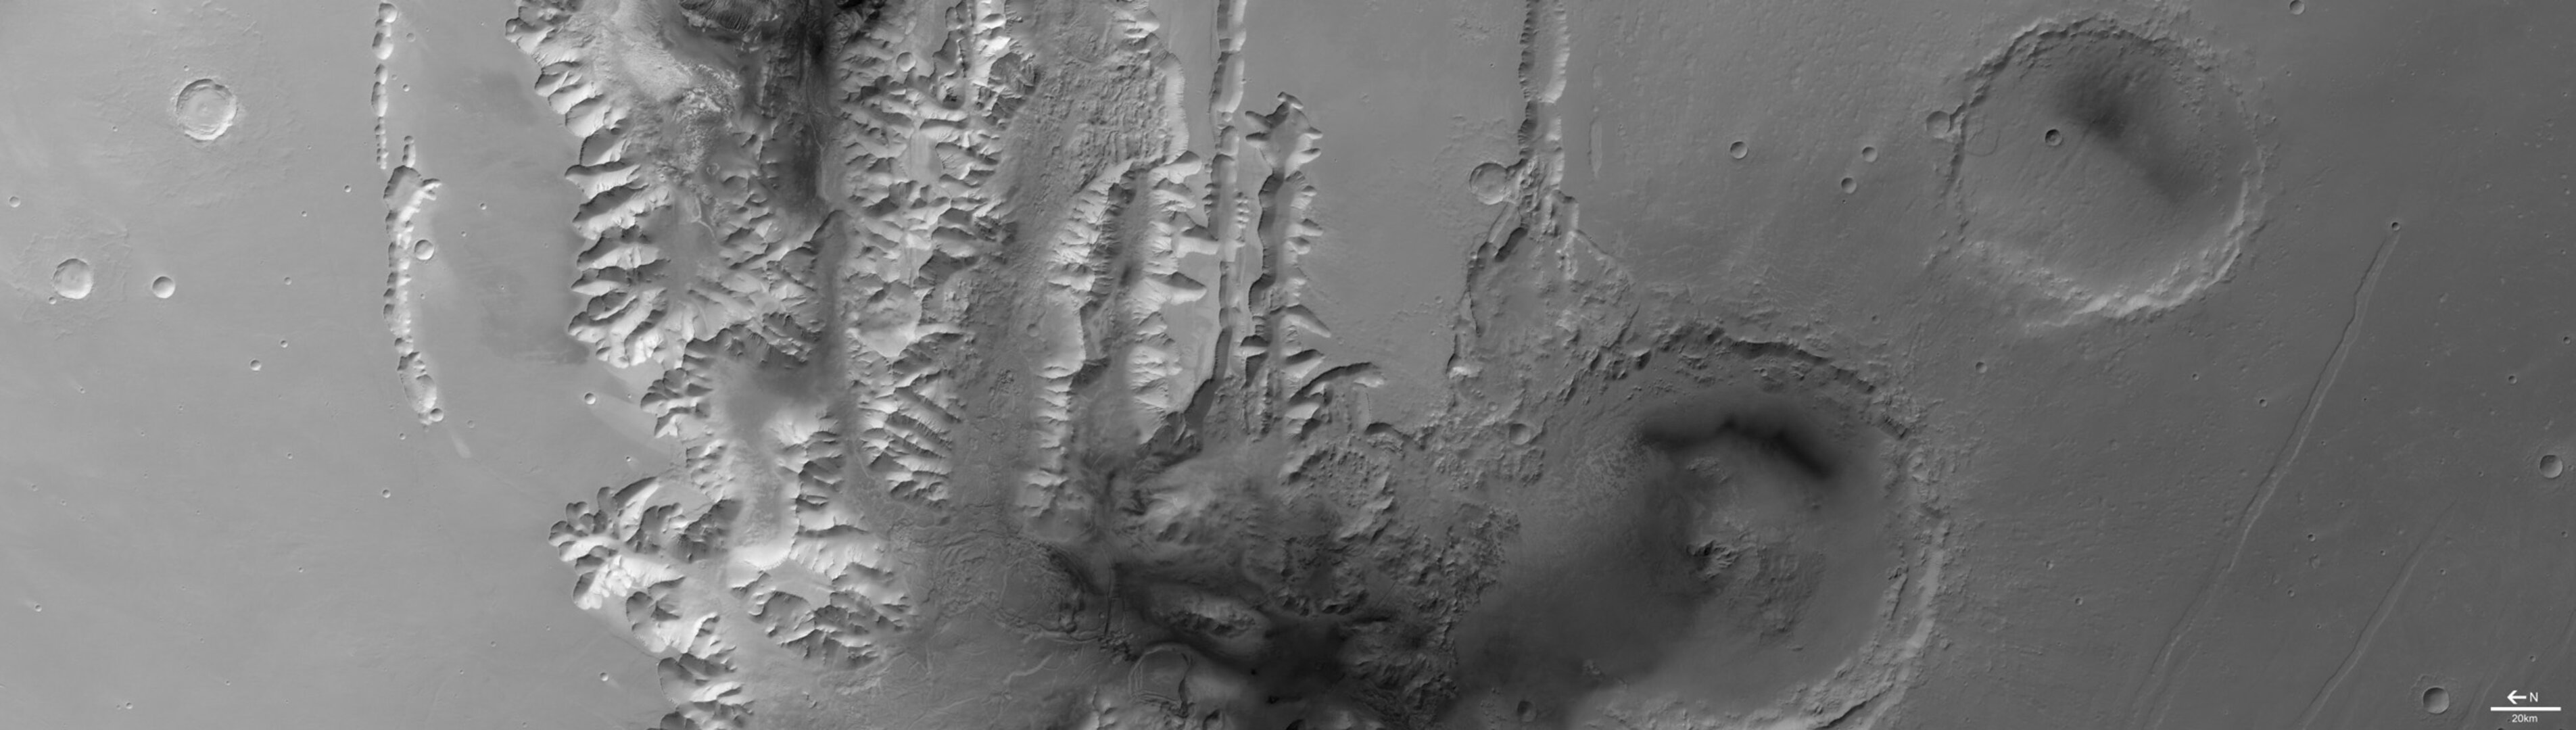 Tithonium Chasma in black and white